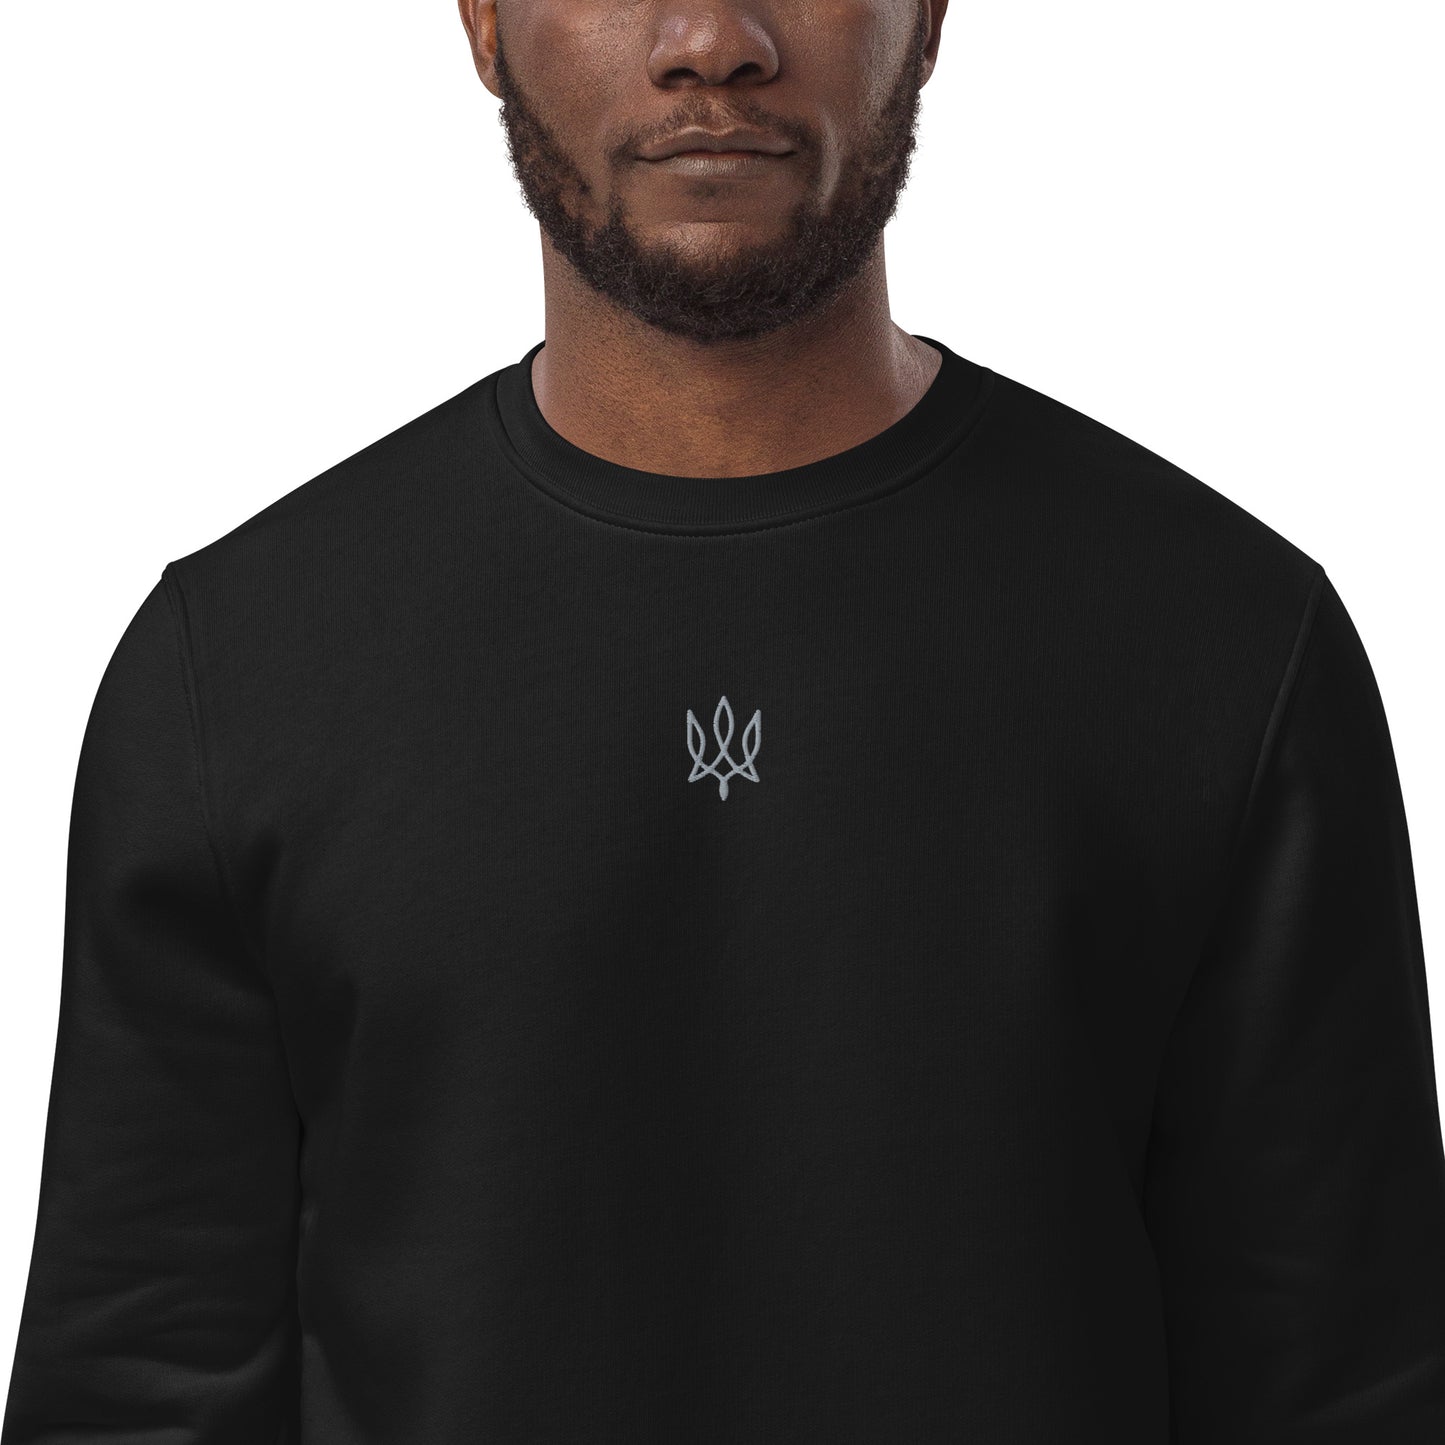 Tryzub embroidered unisex eco sweatshirt in black